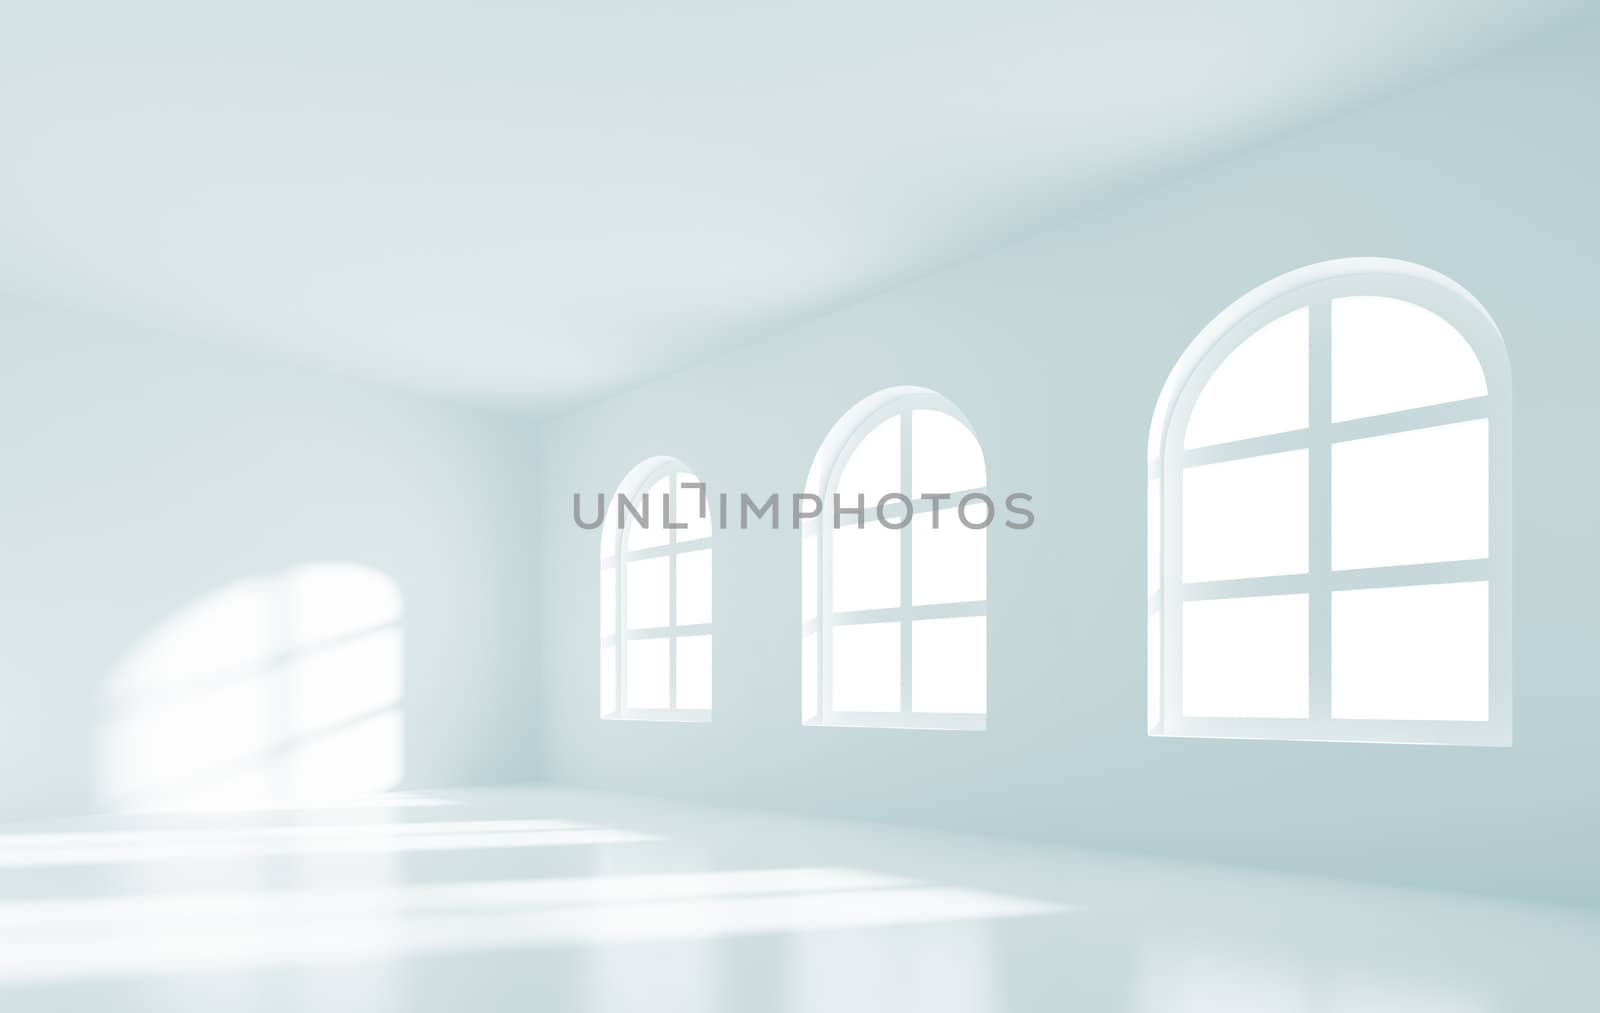 3d Illustration of Empty Room Interior with Windows